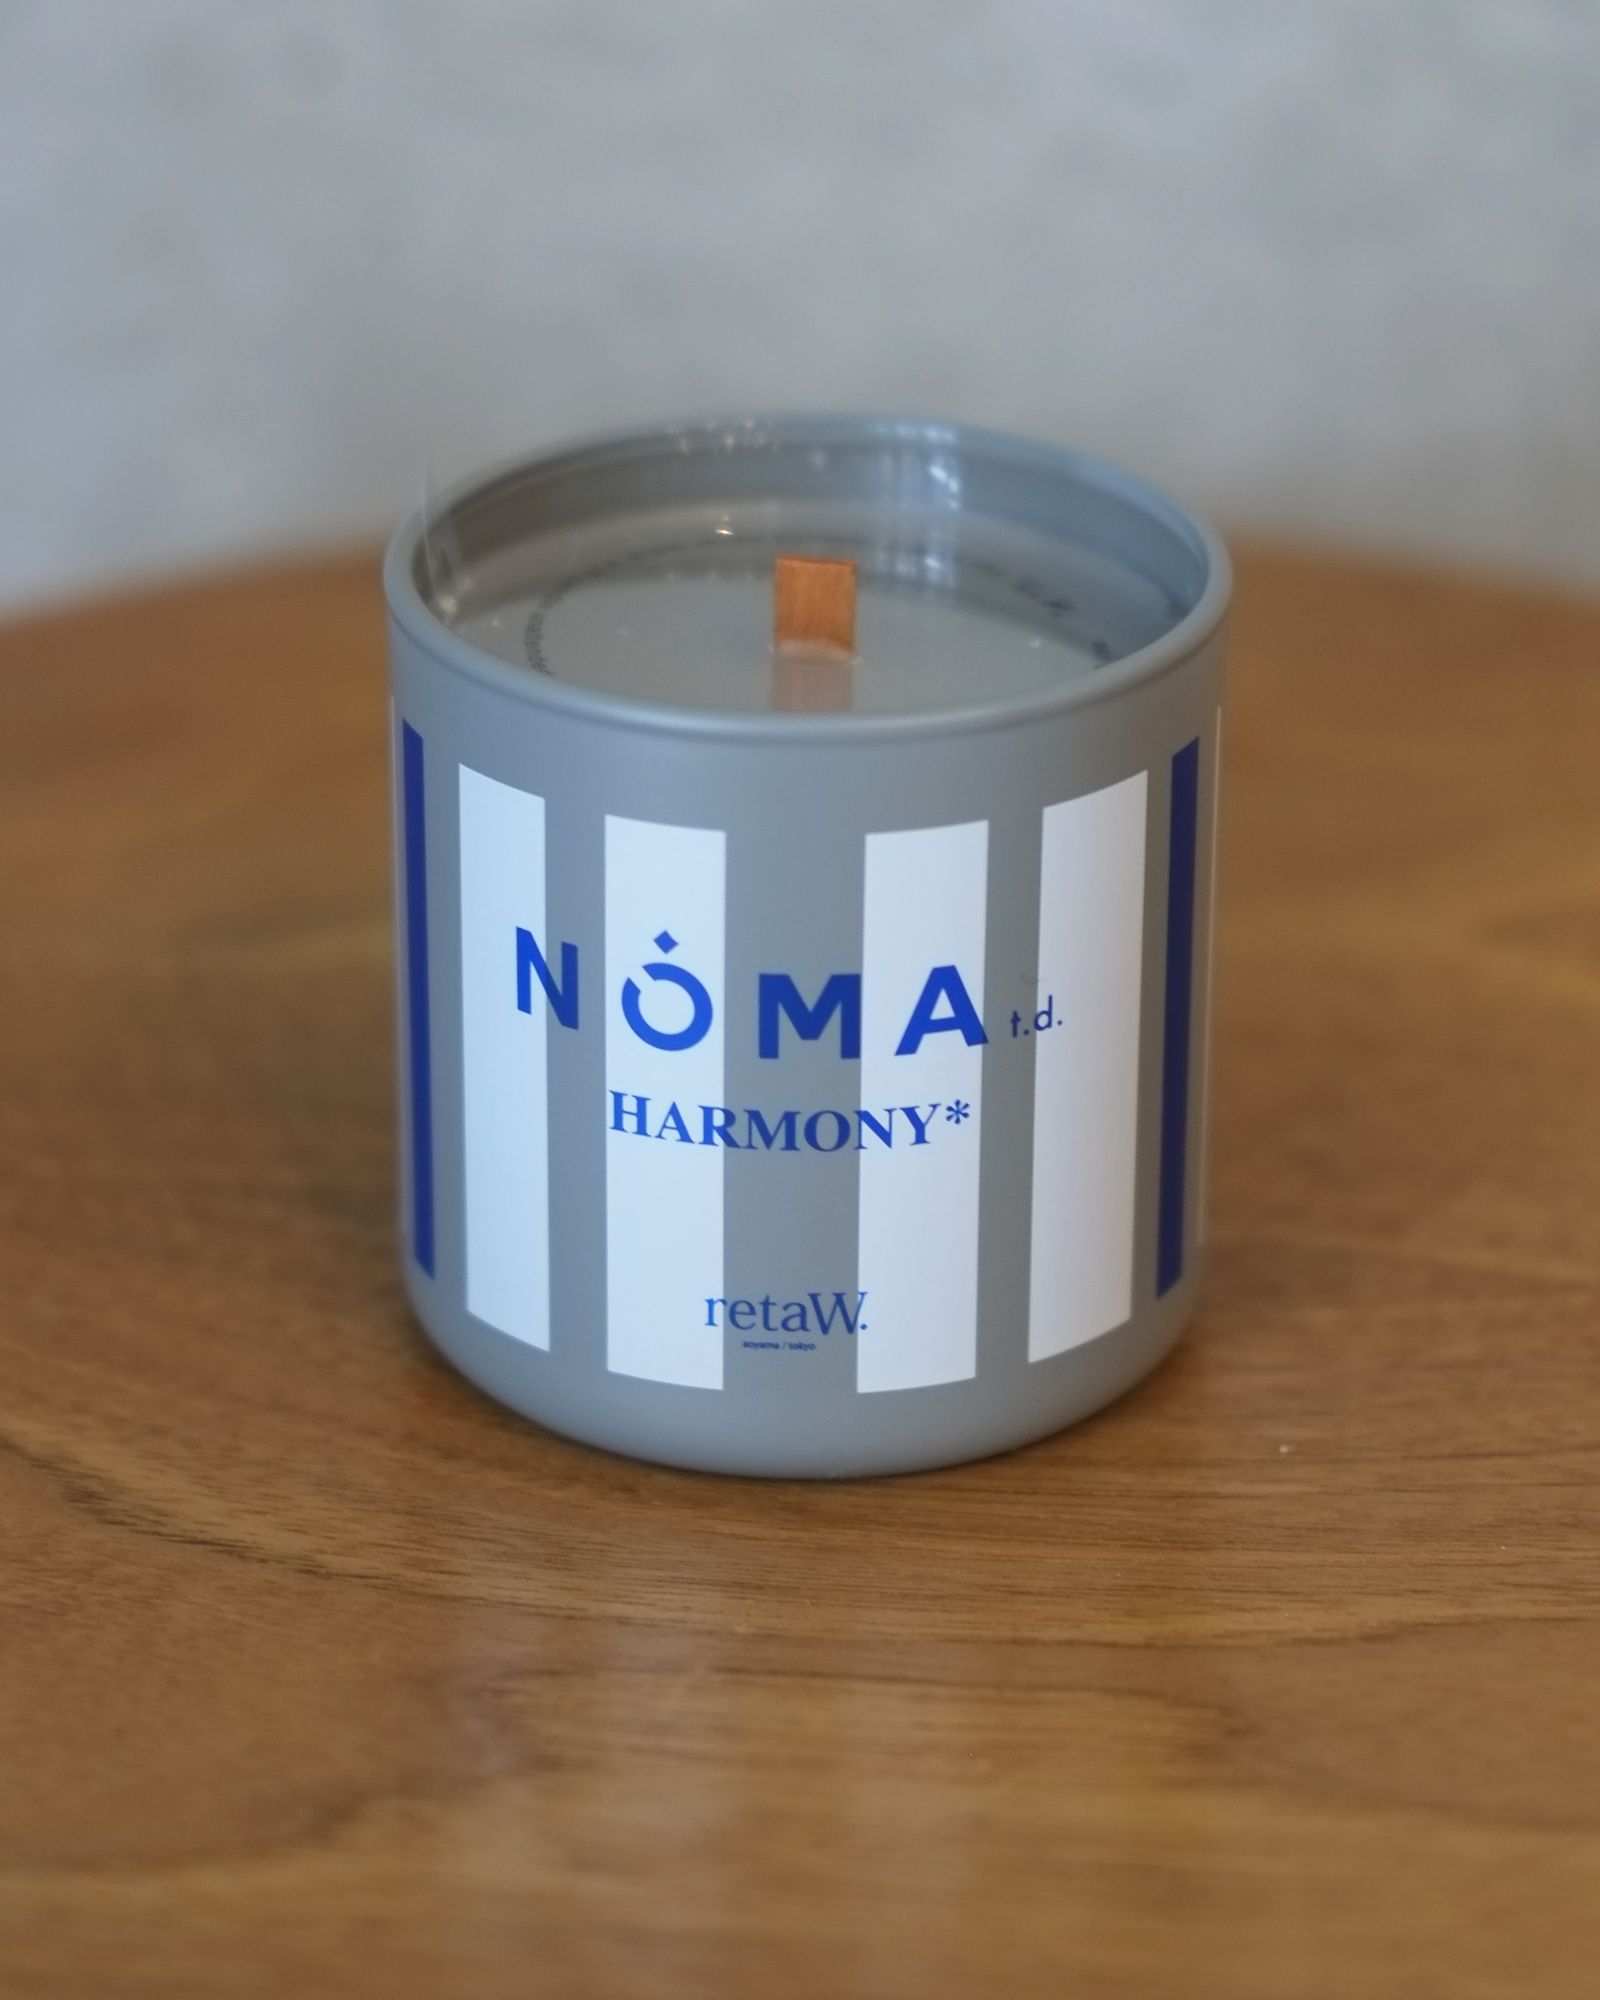 NOMA t.d. - NOMA and retaW HARMONY Candle | fakejam